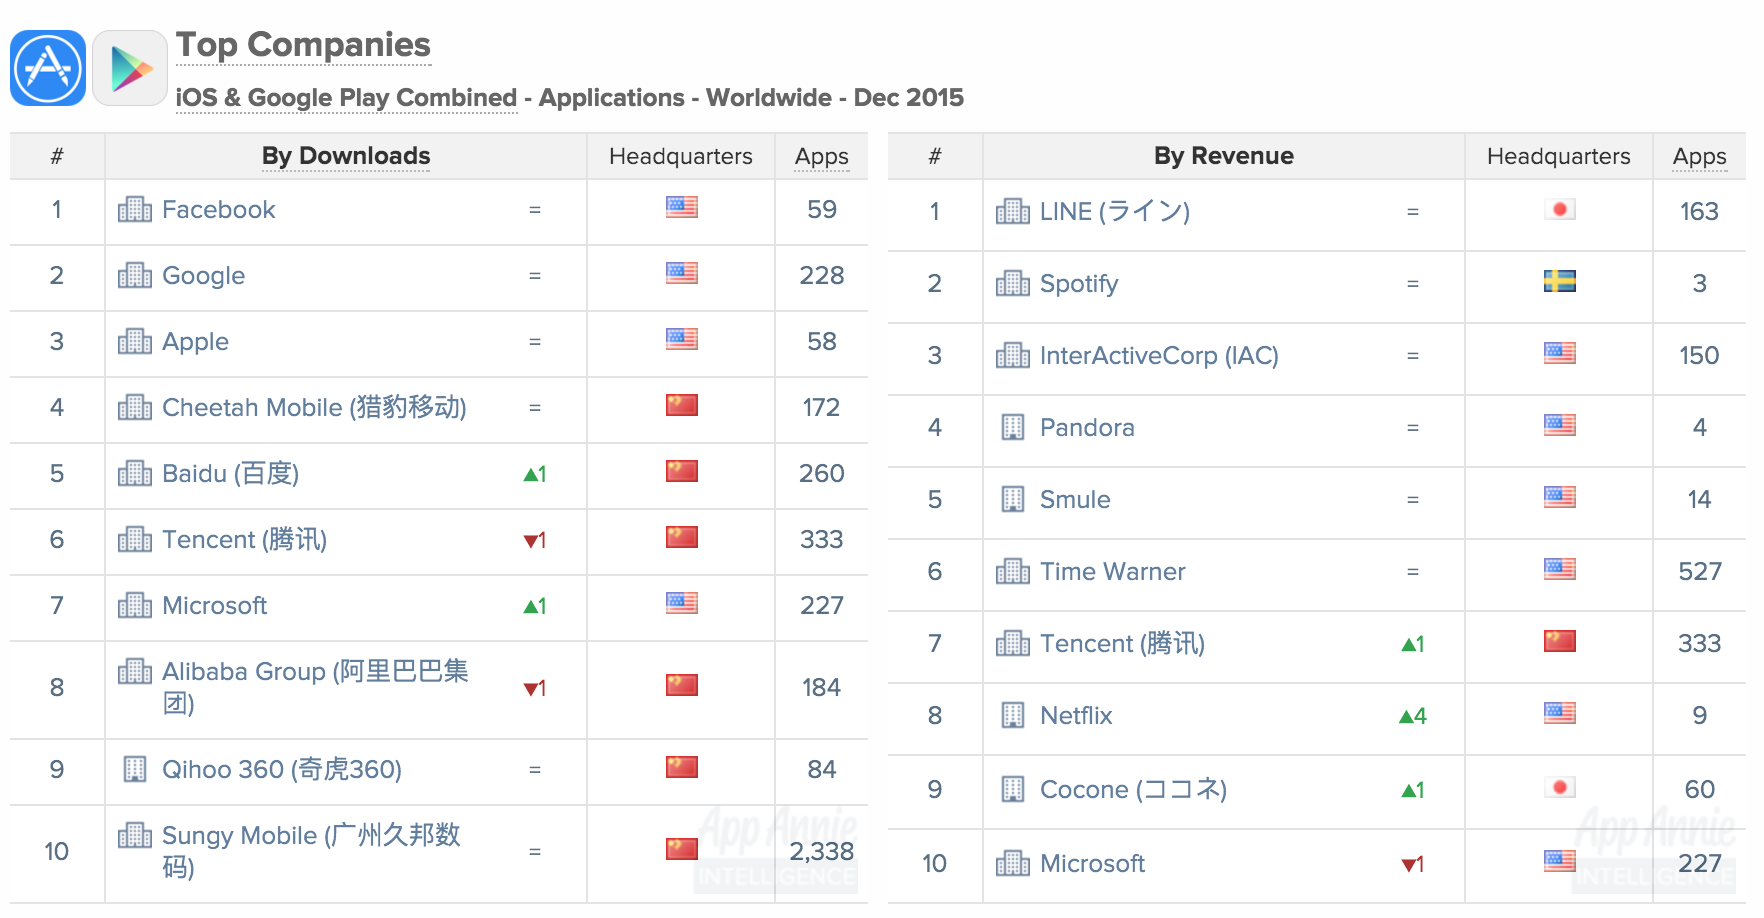 Top Companies iOS and Google Play Combined Worldwide Dec 2015